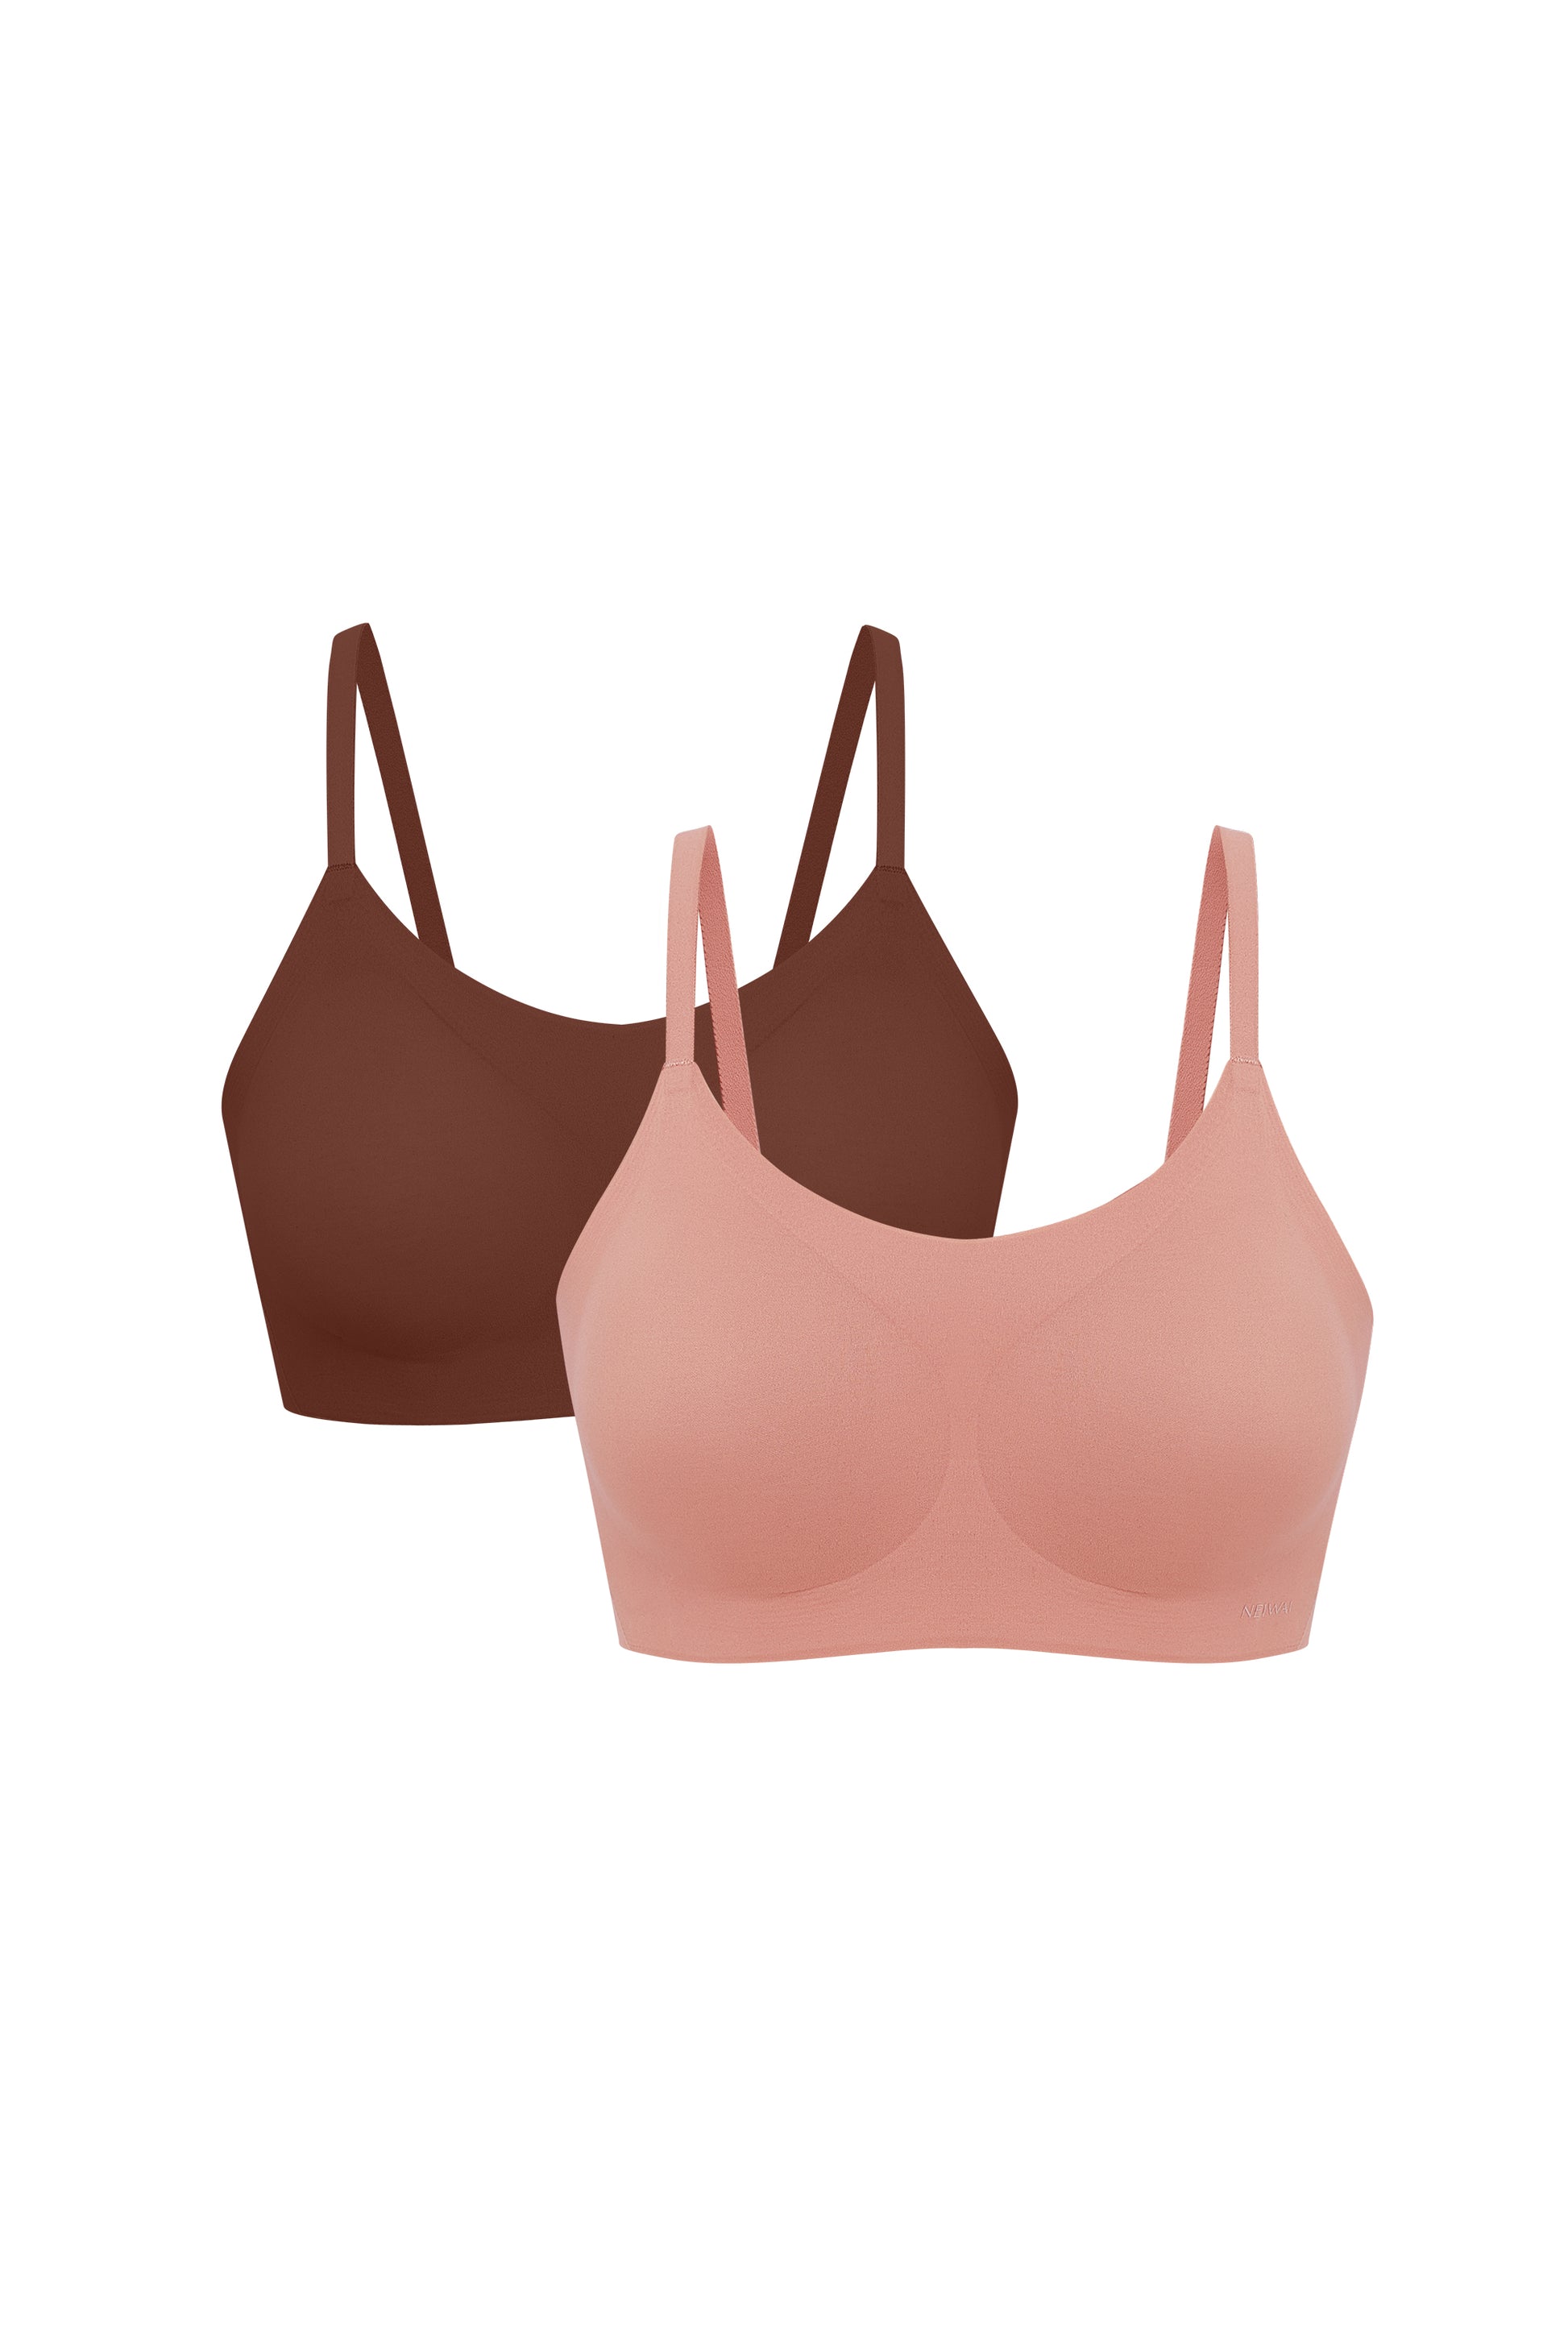 Camisole Bras for Women Lifting Breast Thin Strap Crop Top Bra Bra